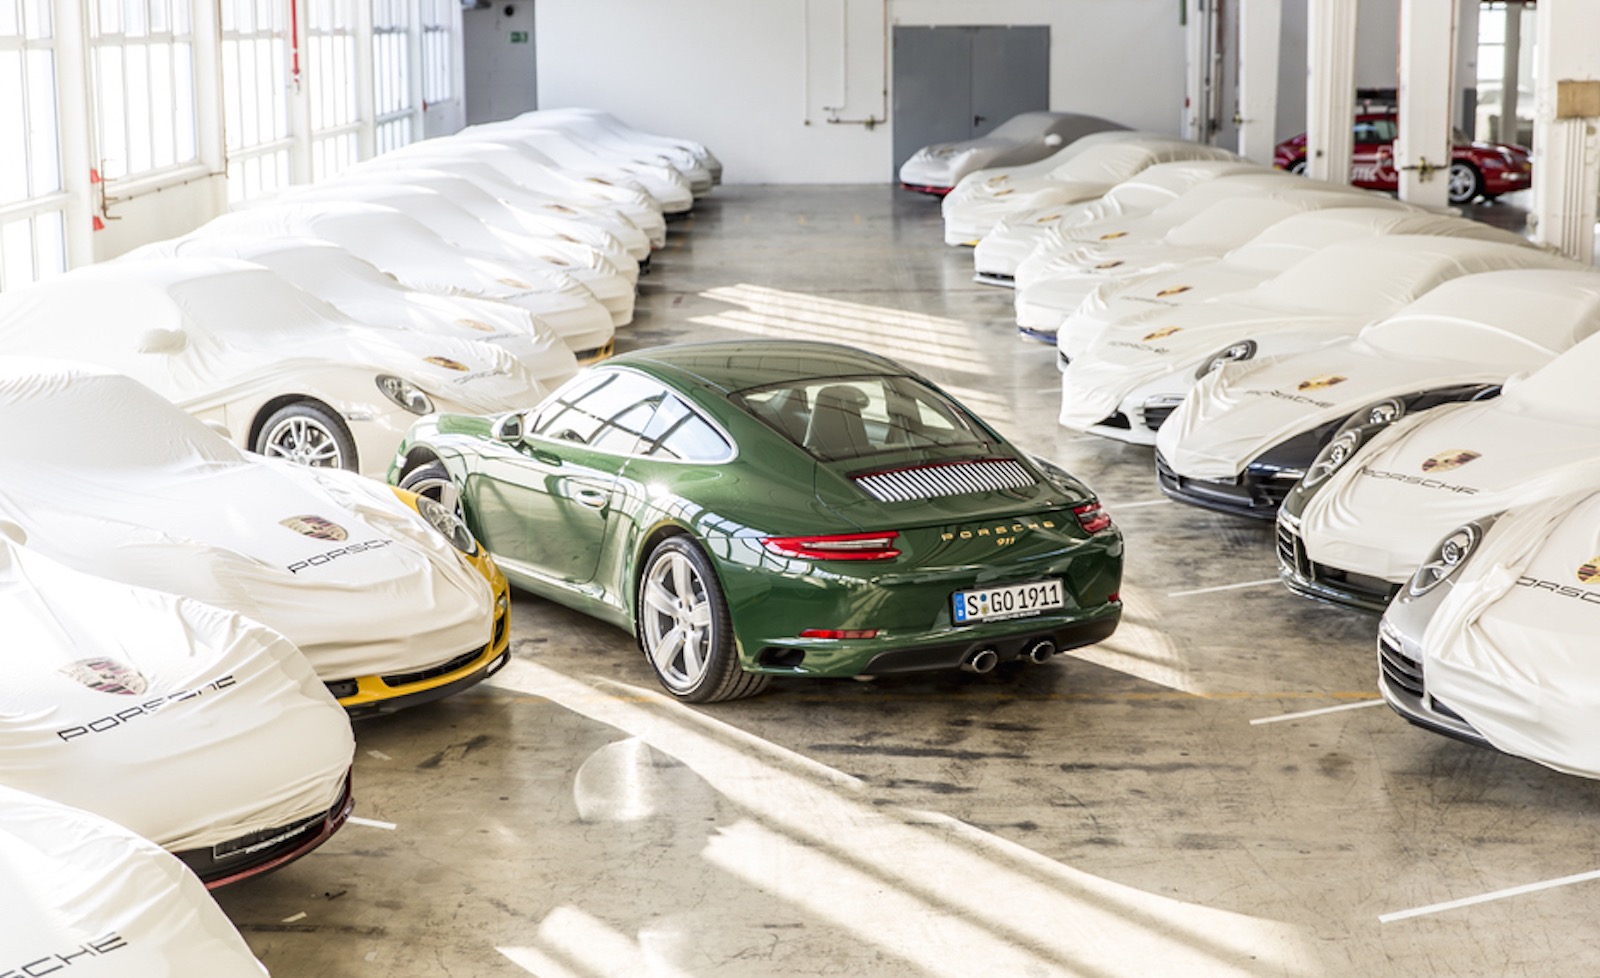 Porsche 911 production hits 1 million milestone